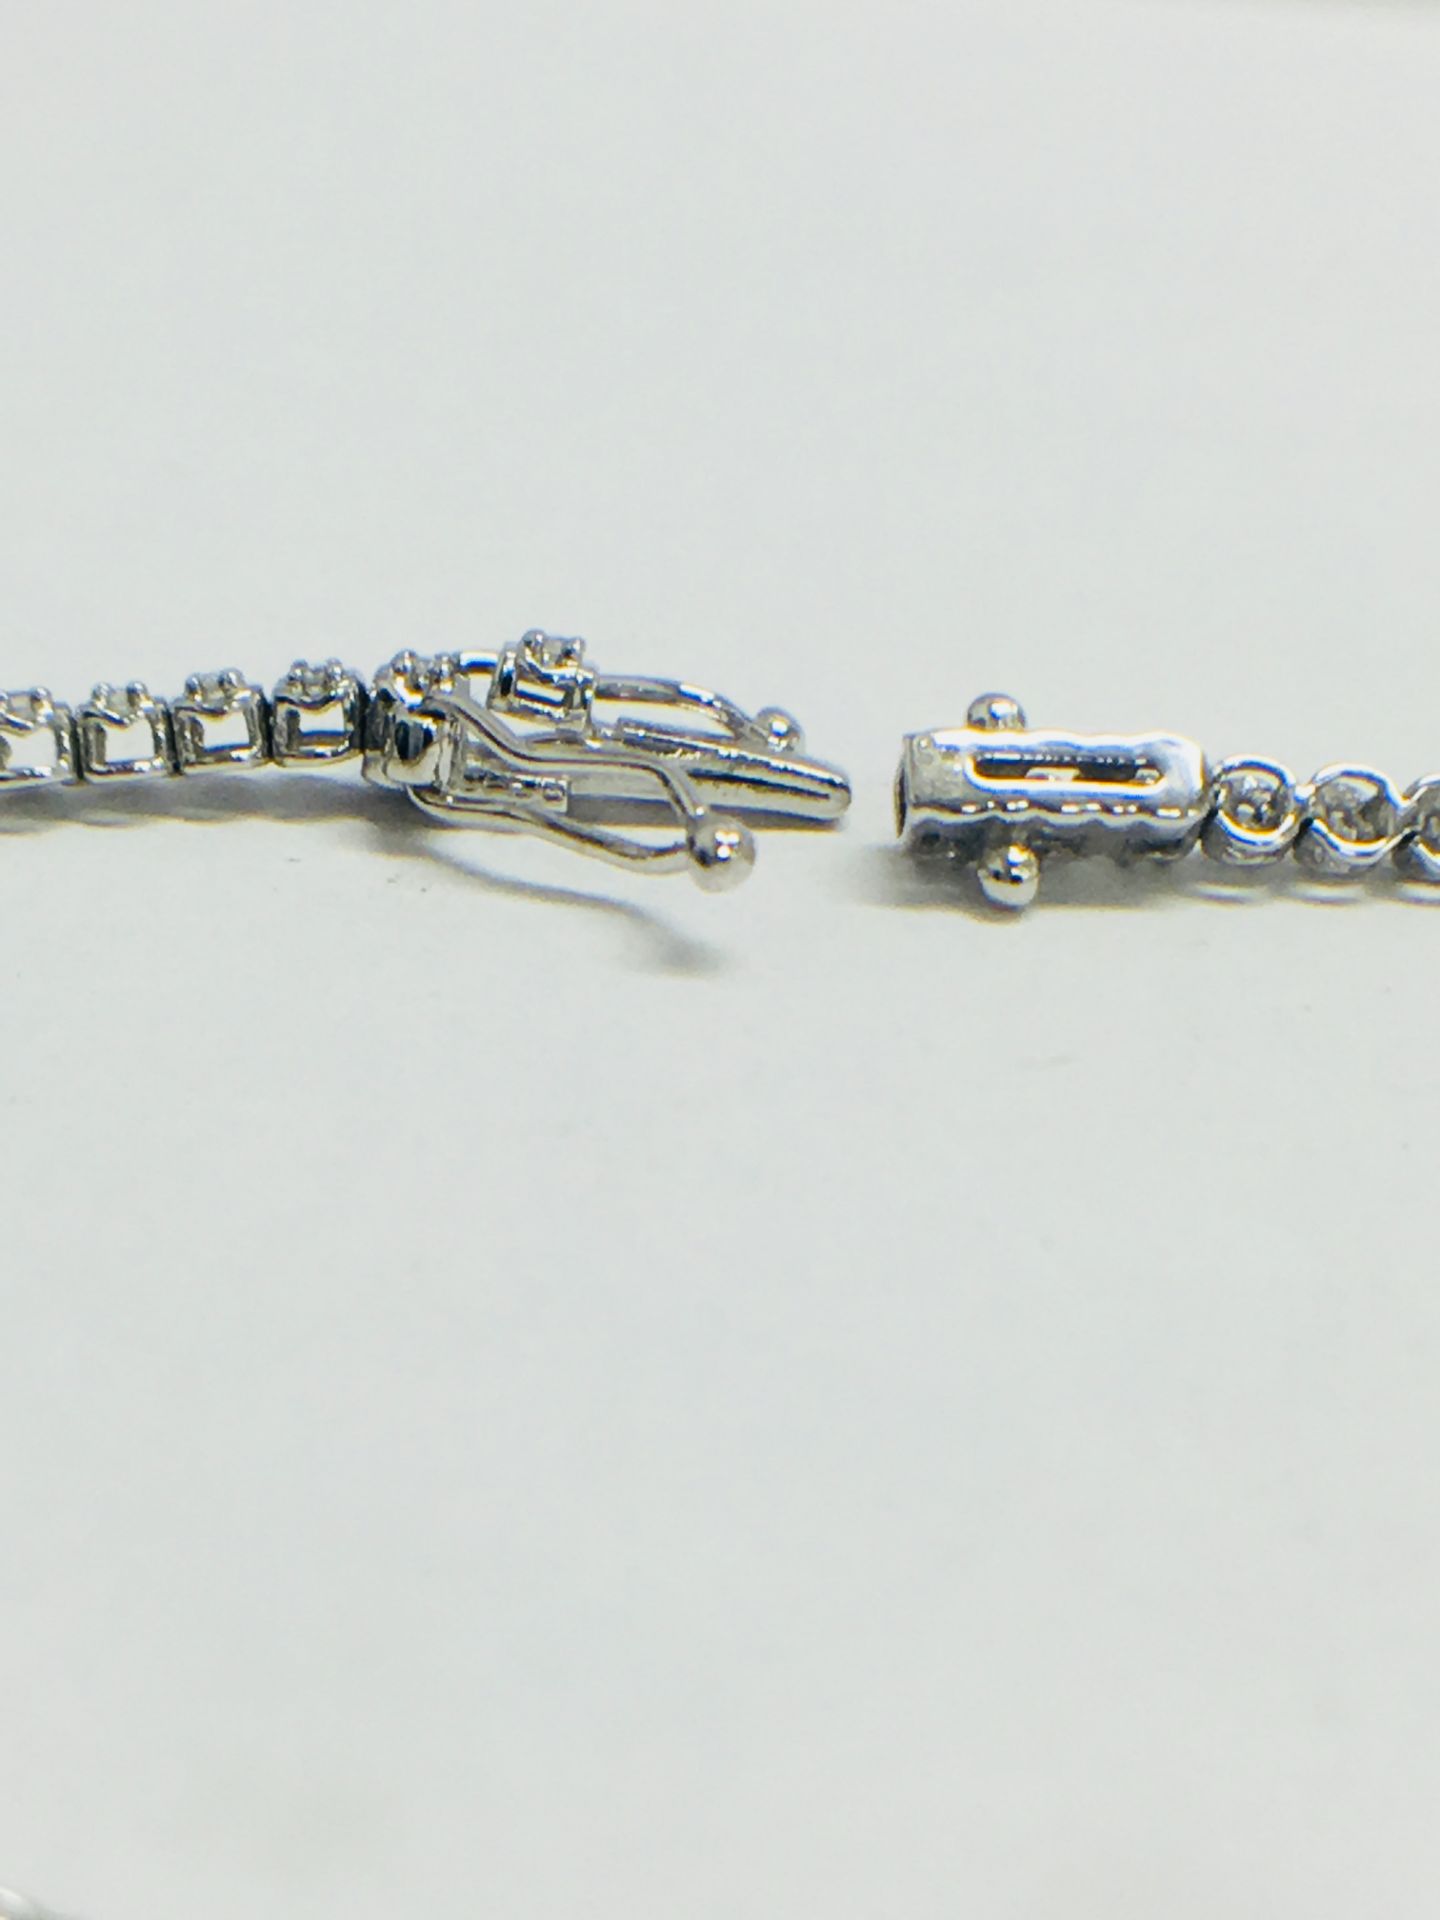 9CT White Gold Diamond Bracelet - Image 3 of 5